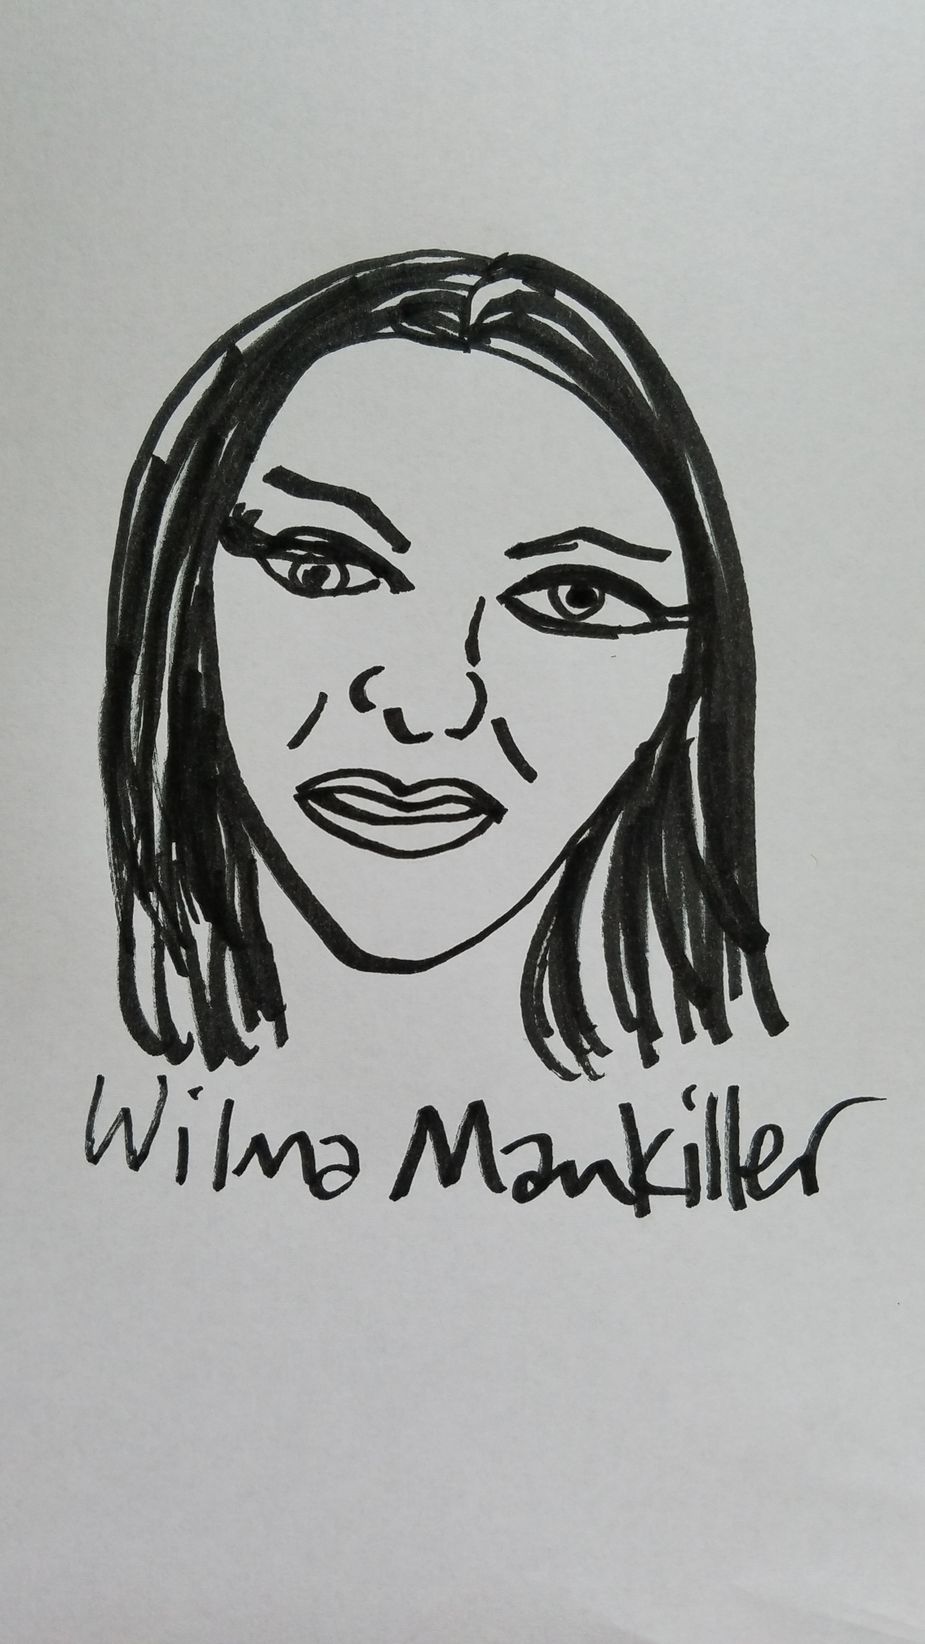 Wilma Mankiller by Megan Rossman